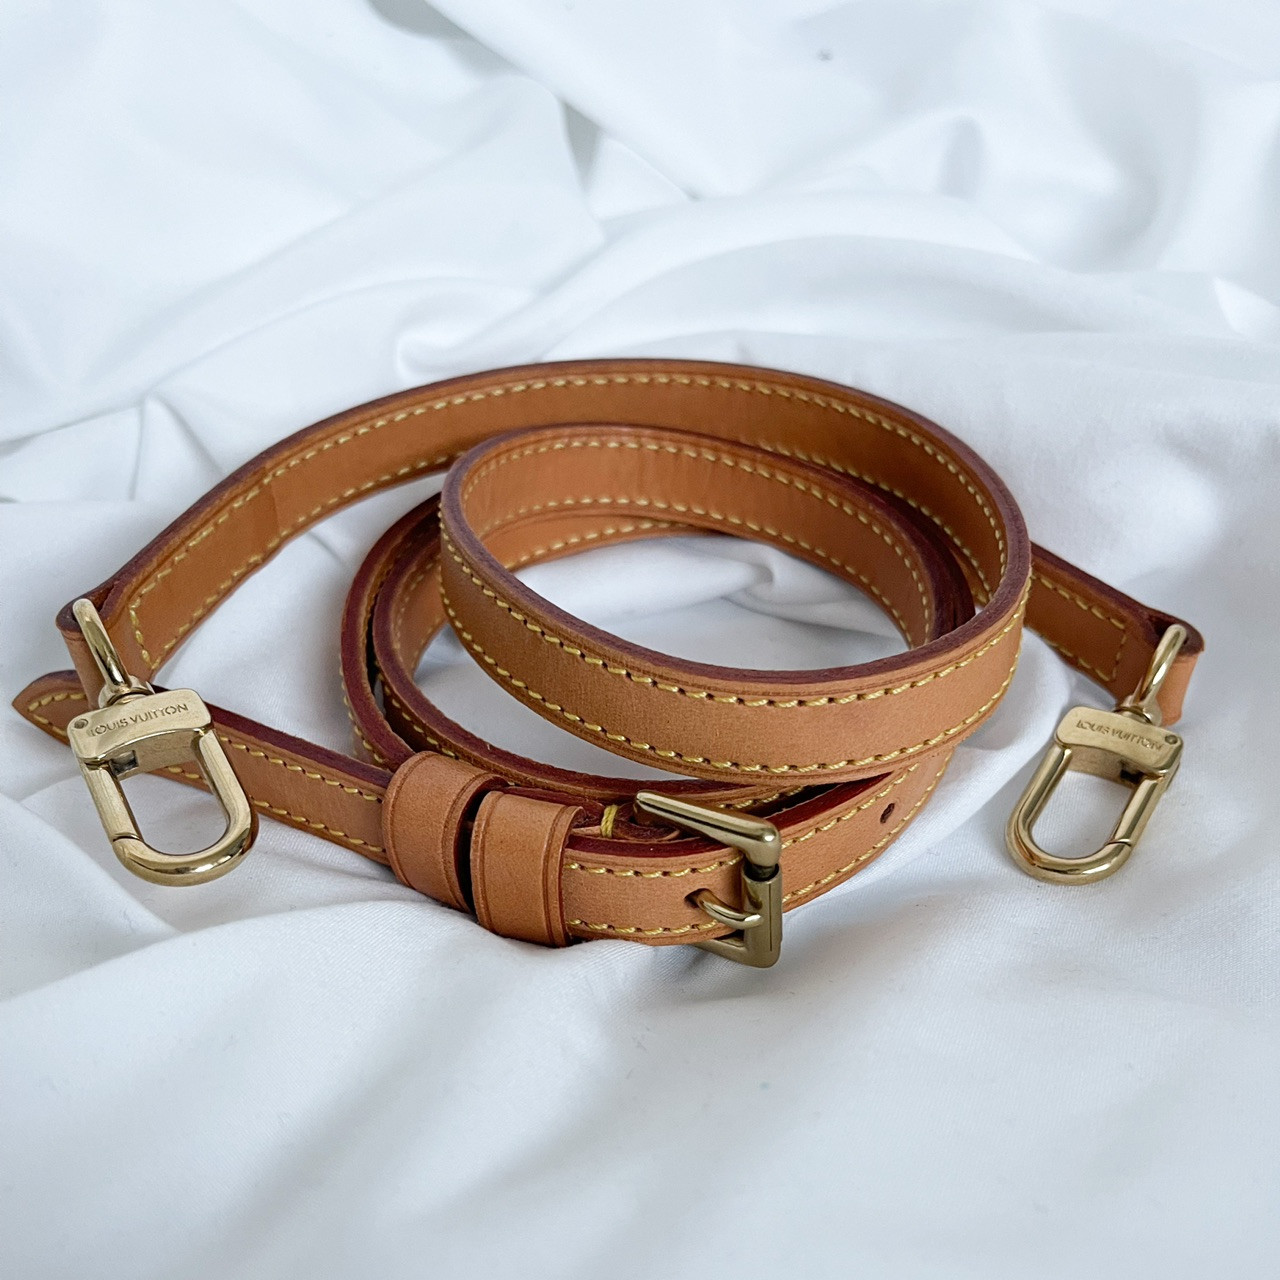 Vachetta Leather Wristlet Strap -Natural Vachetta or Honey Tanning